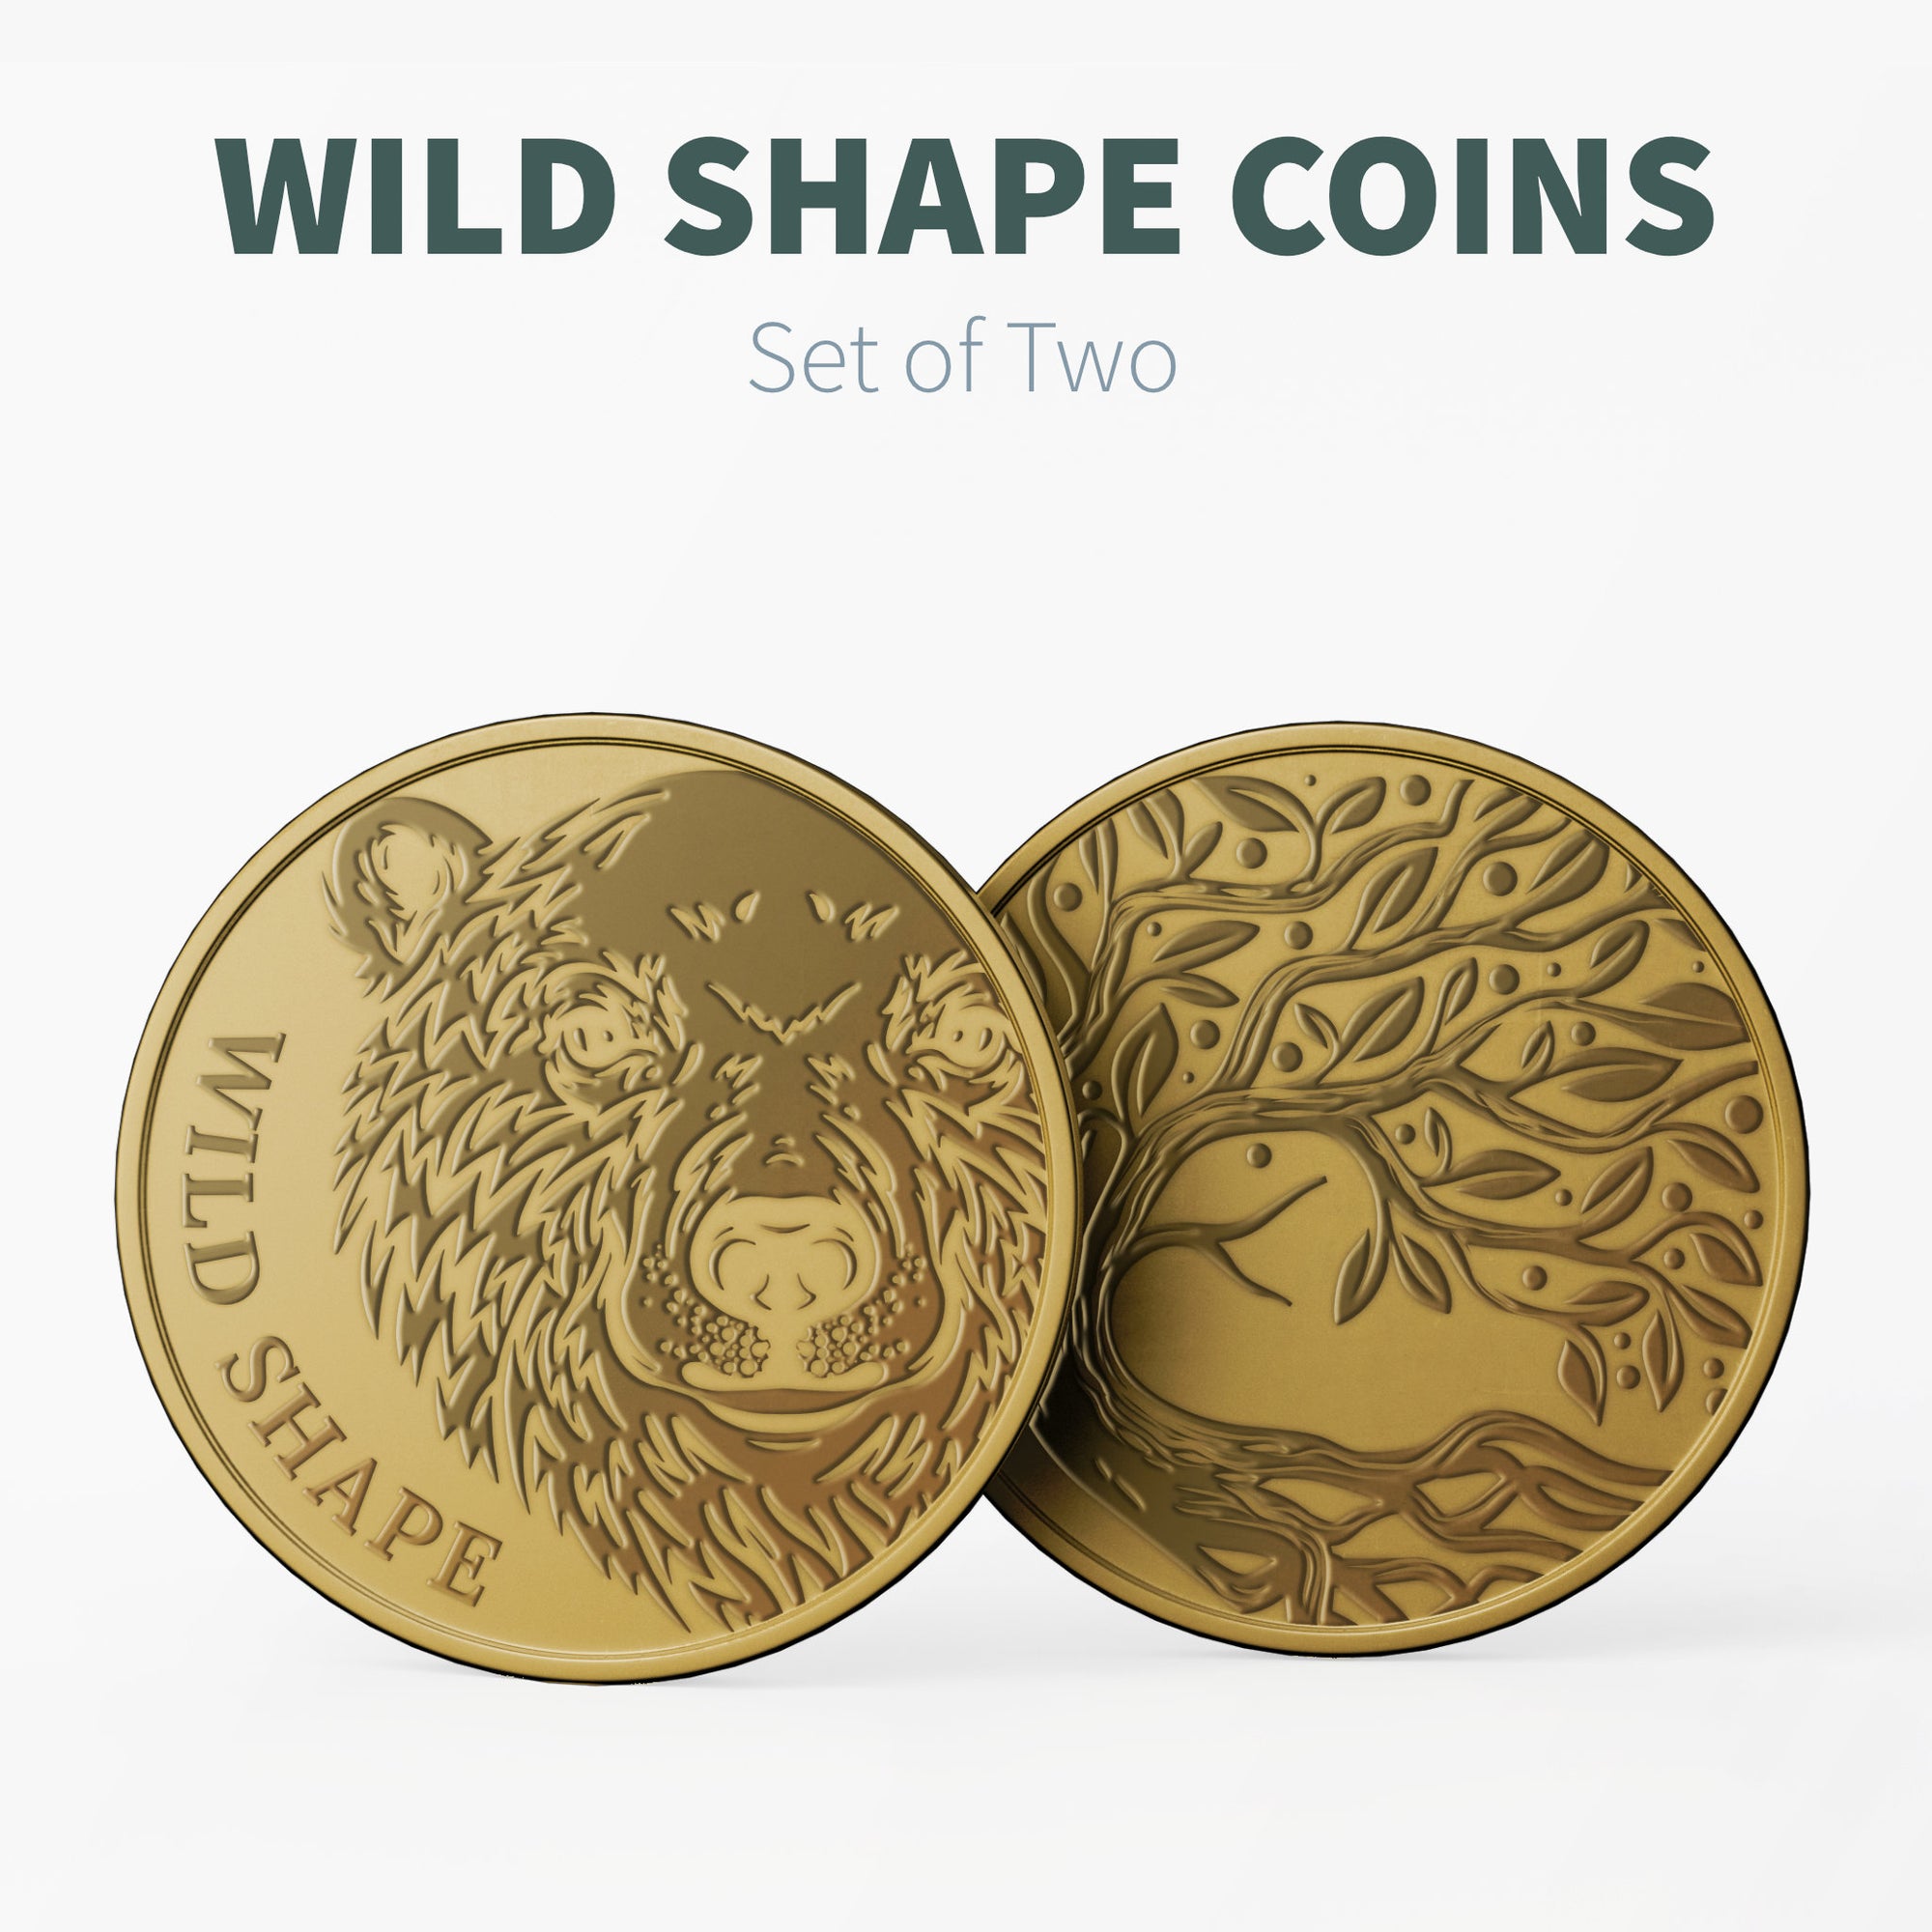 Wild Shape Coins